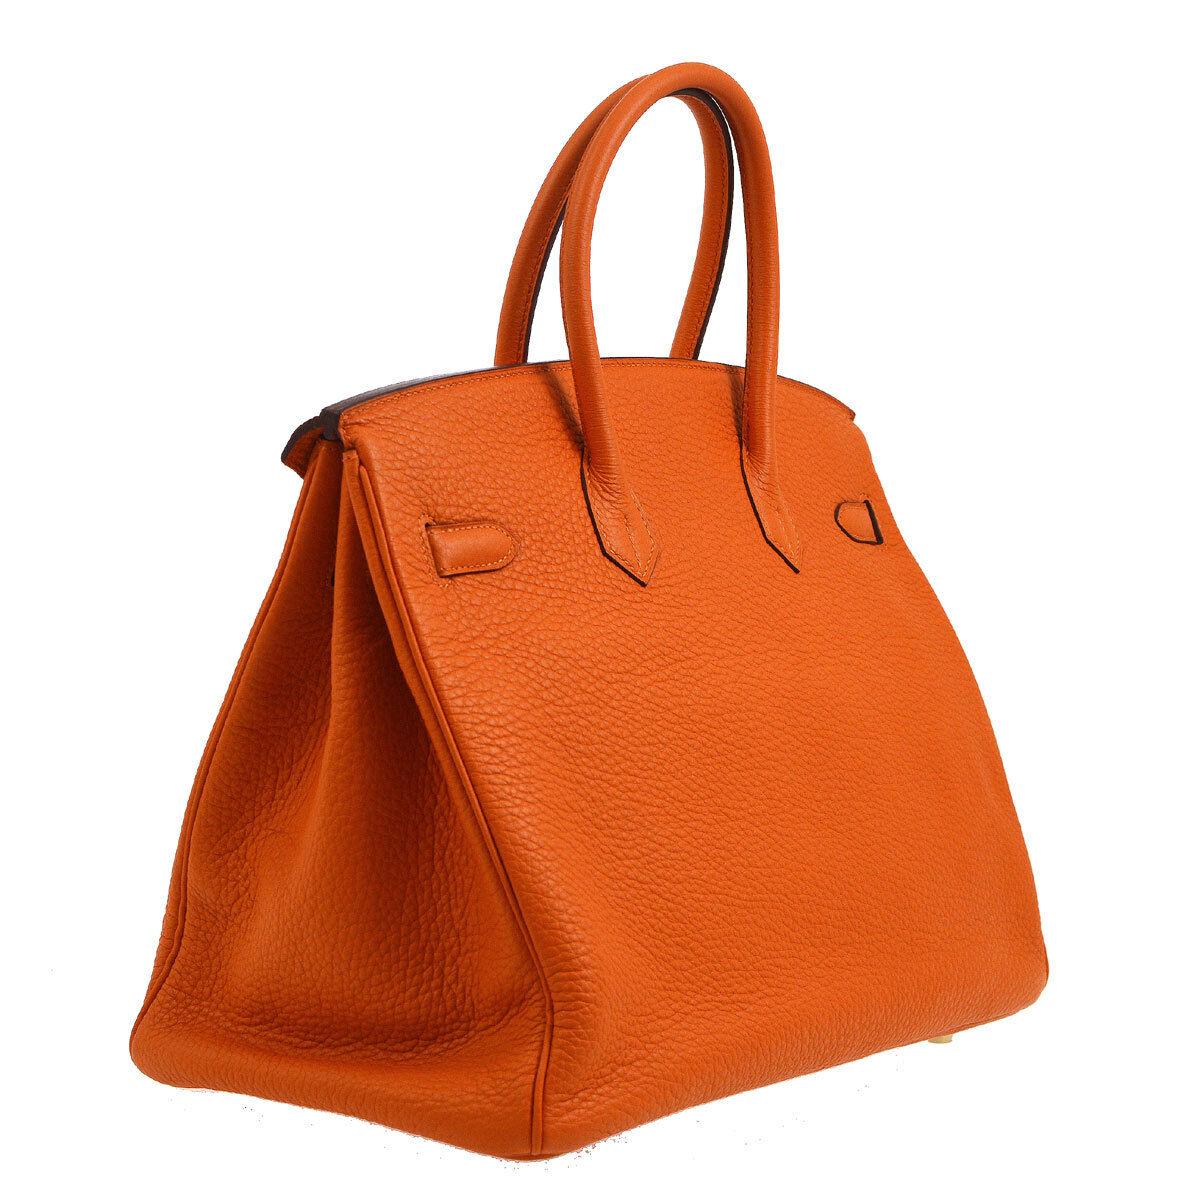 Hermes Birkin 35 Orange Leather Gold Top Handle Satchel Travel Tote Bag in Box 2